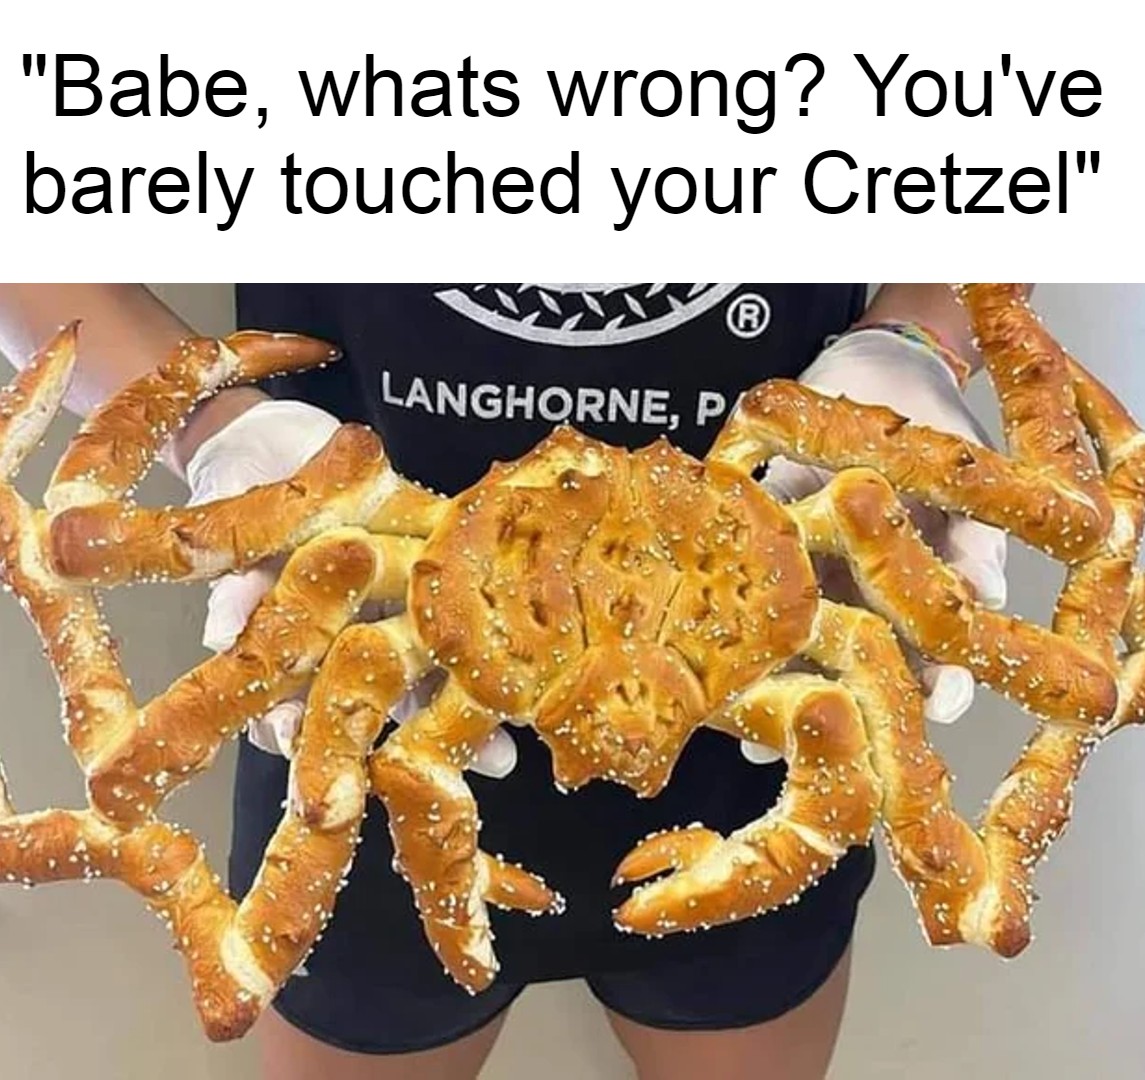 monday morning randomness - pretzel meme - "Babe, whats wrong? You've barely touched your Cretzel" Langhorne, P